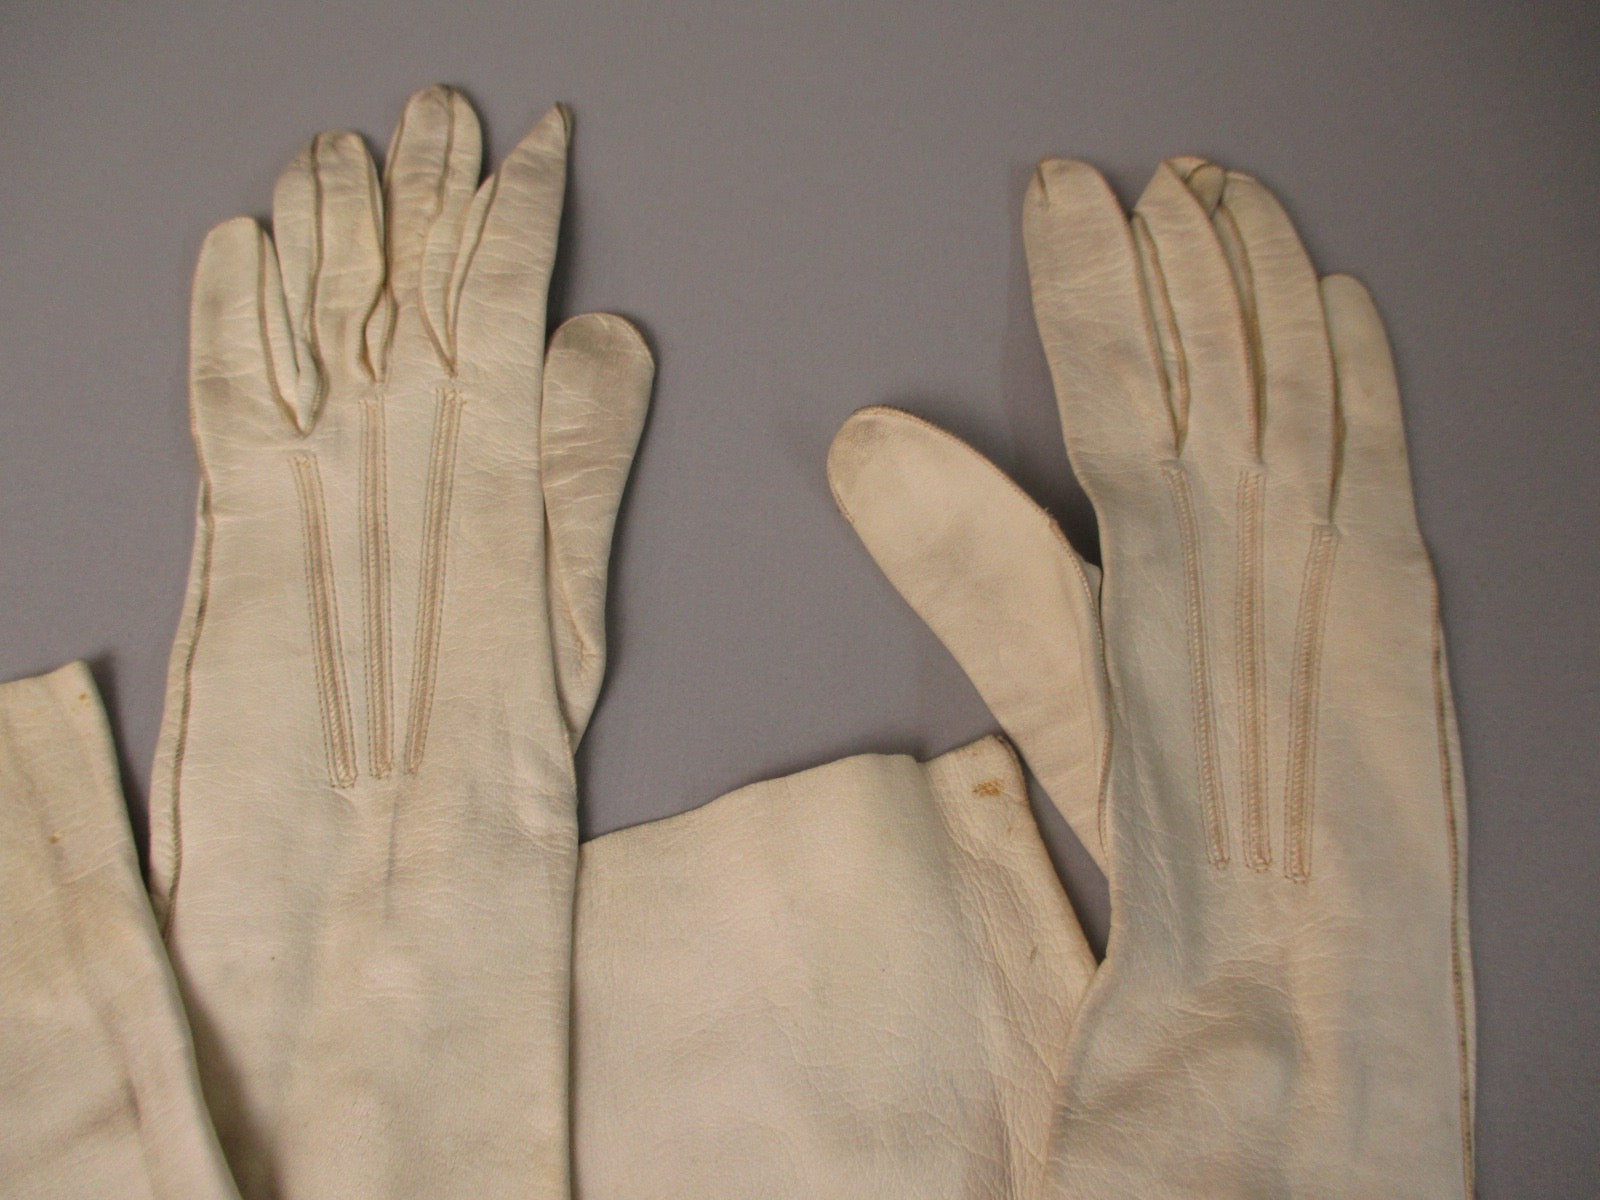 Antique Victorian Kid Leather Opera Gloves